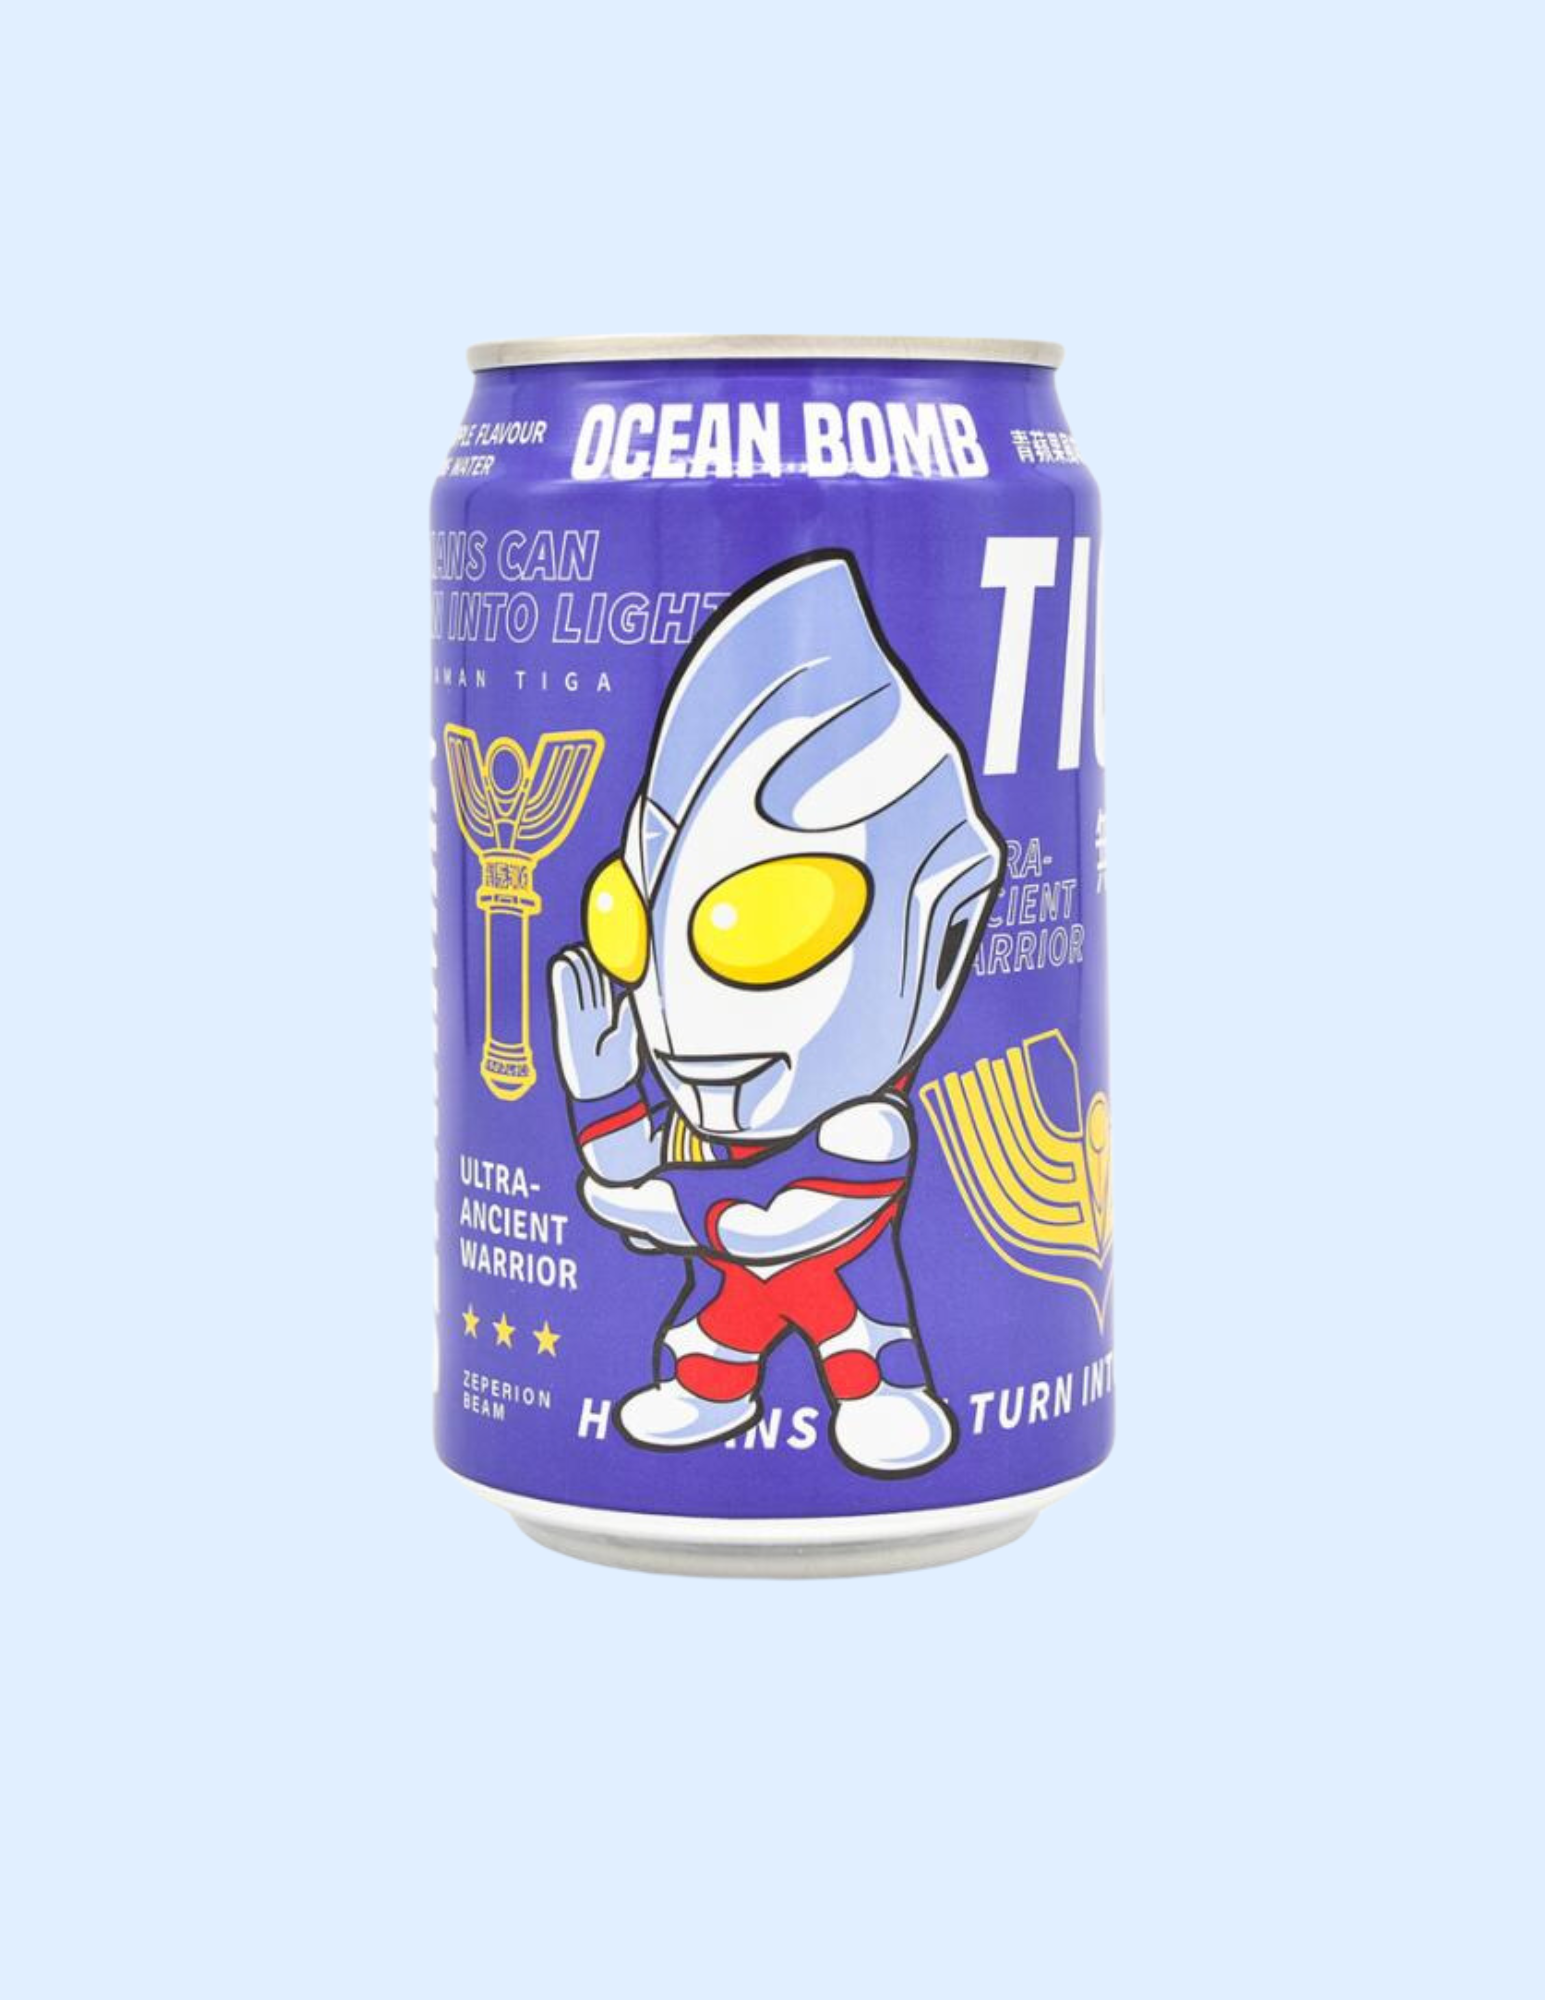 Ocean Bomb x Ultraman Sparkling Water